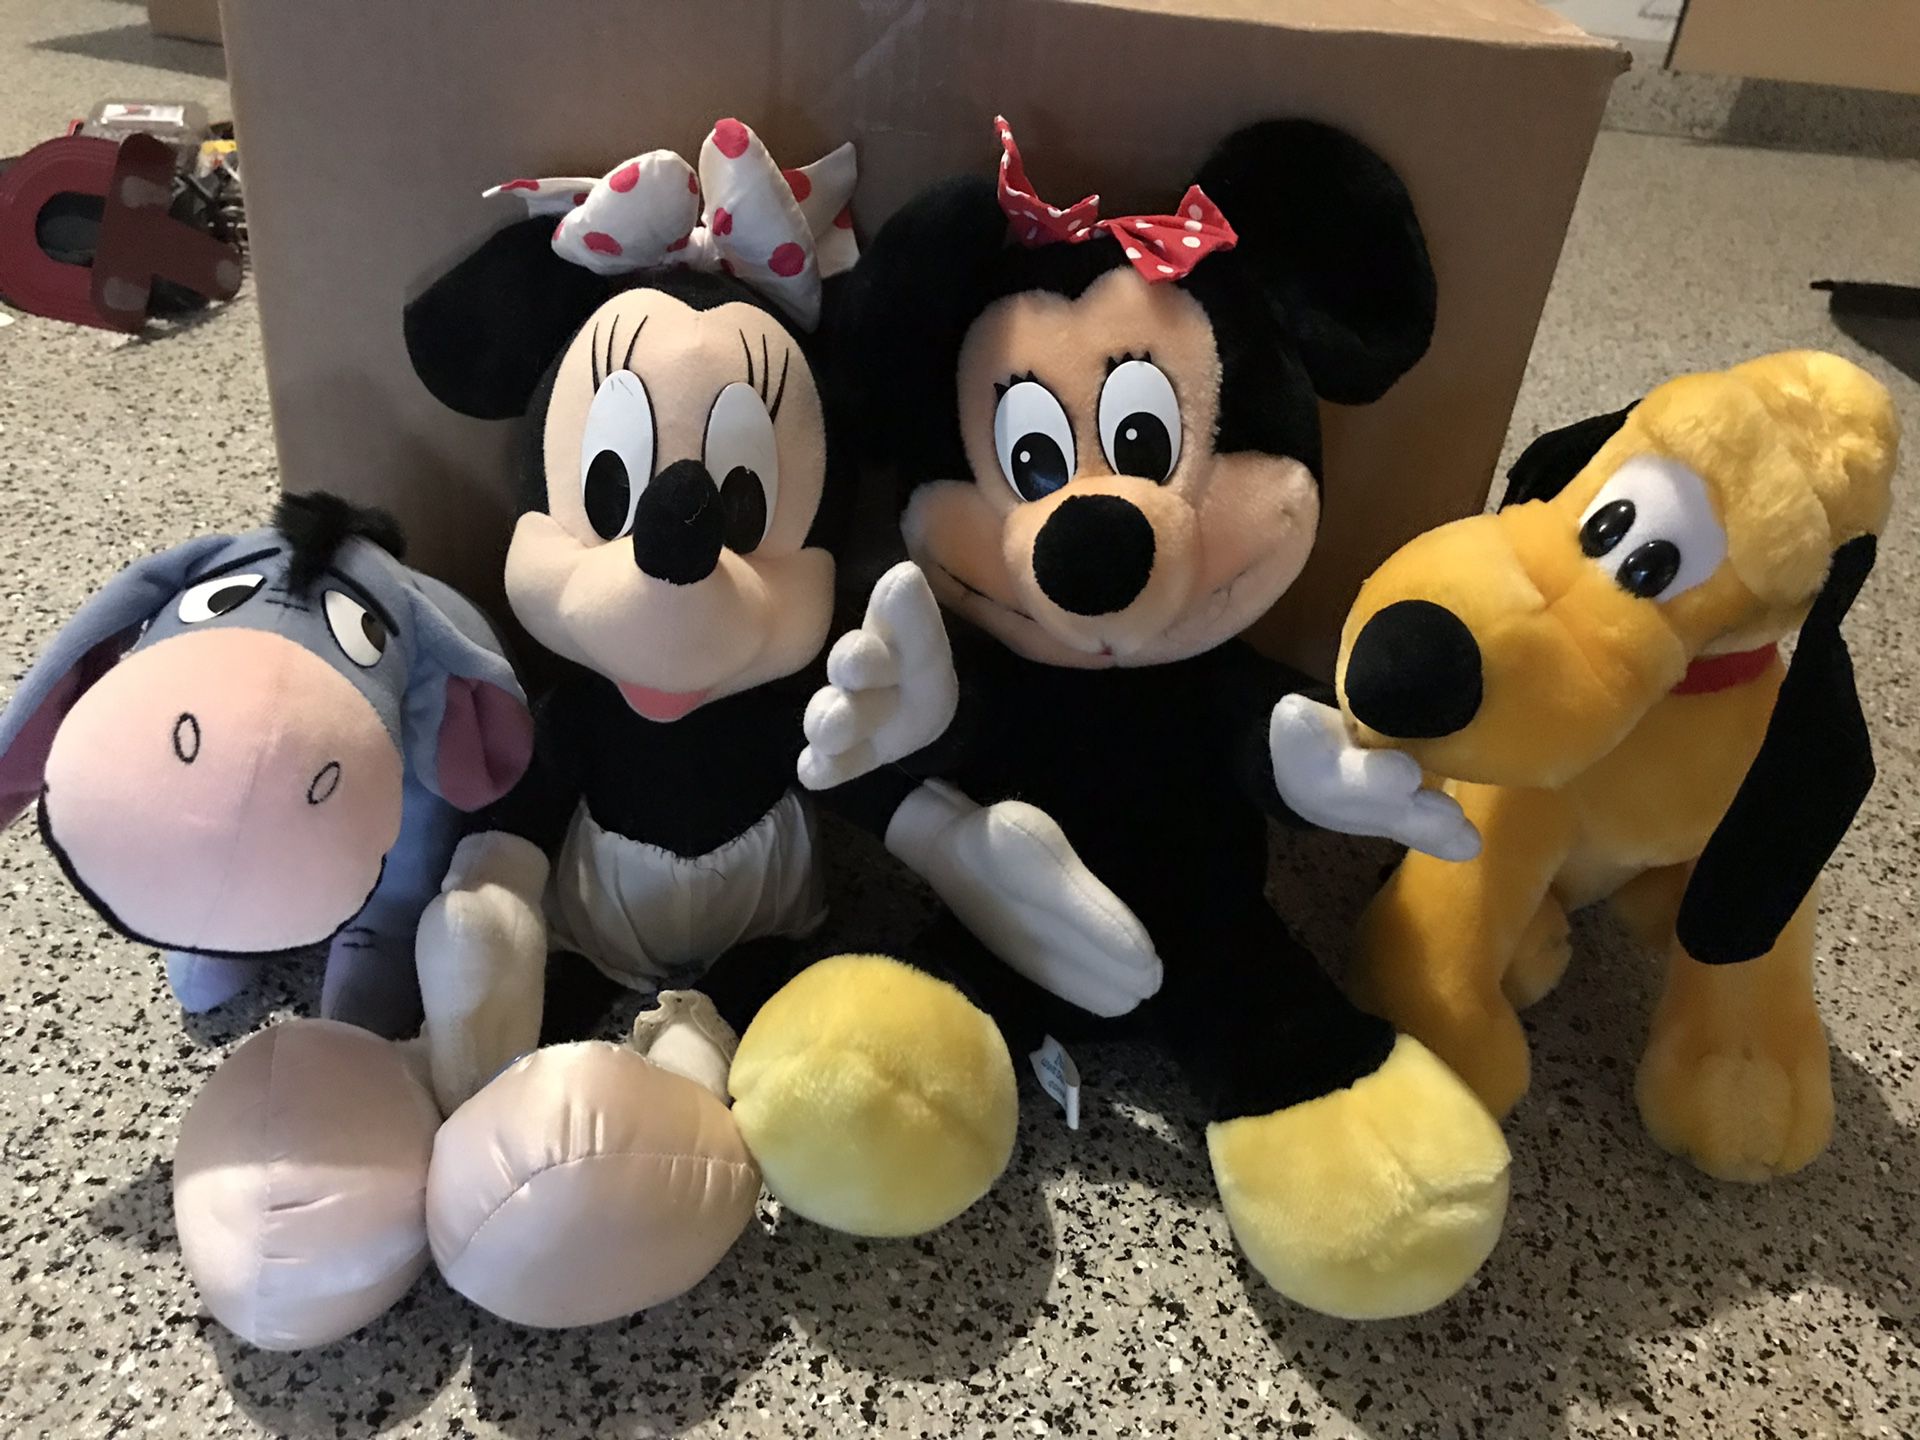 Original Disney stuffed characters $30 firm for all or $10 each: Mini, Daisy, Eeyore & Pluto